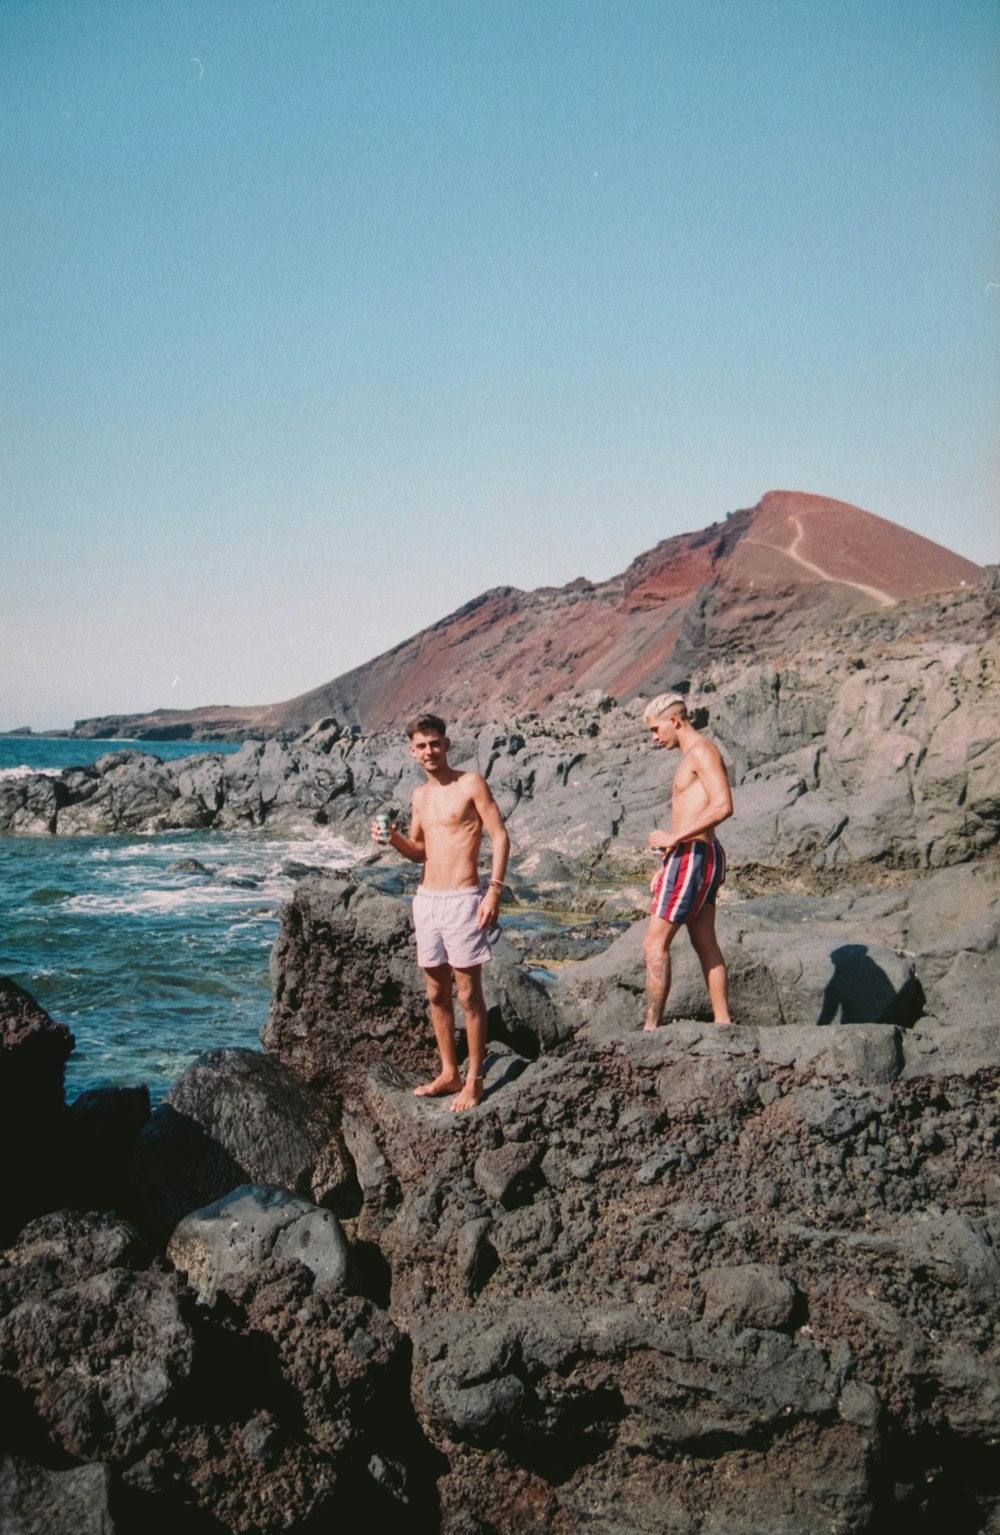 2 men standing on rocky shore during daytime